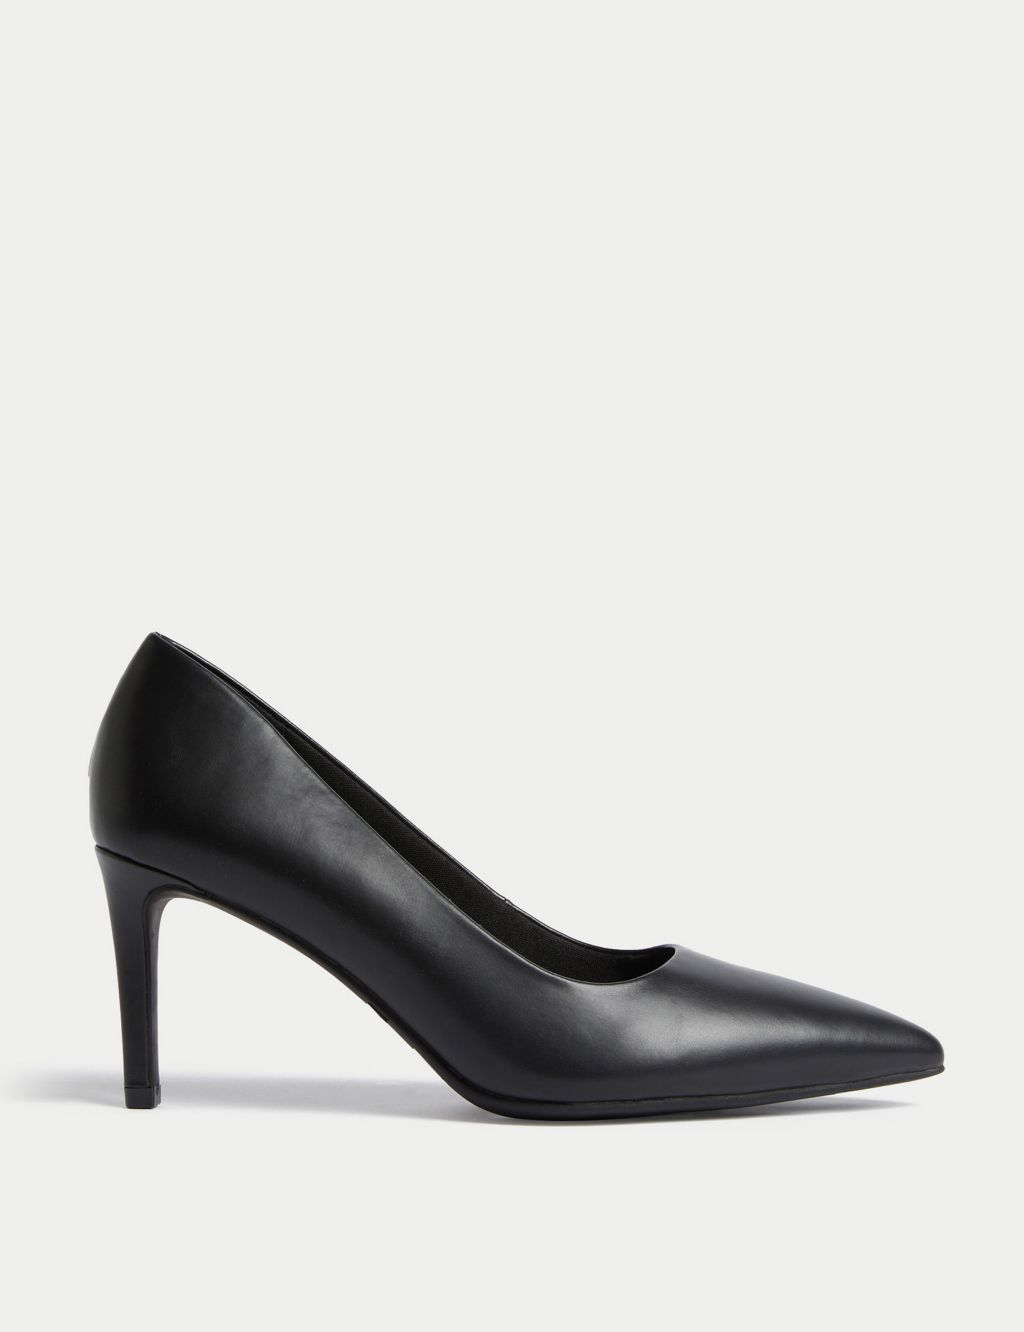 Buy Page 2 - Women’s Black Footwear |M&S from the M&S UK Online Shop